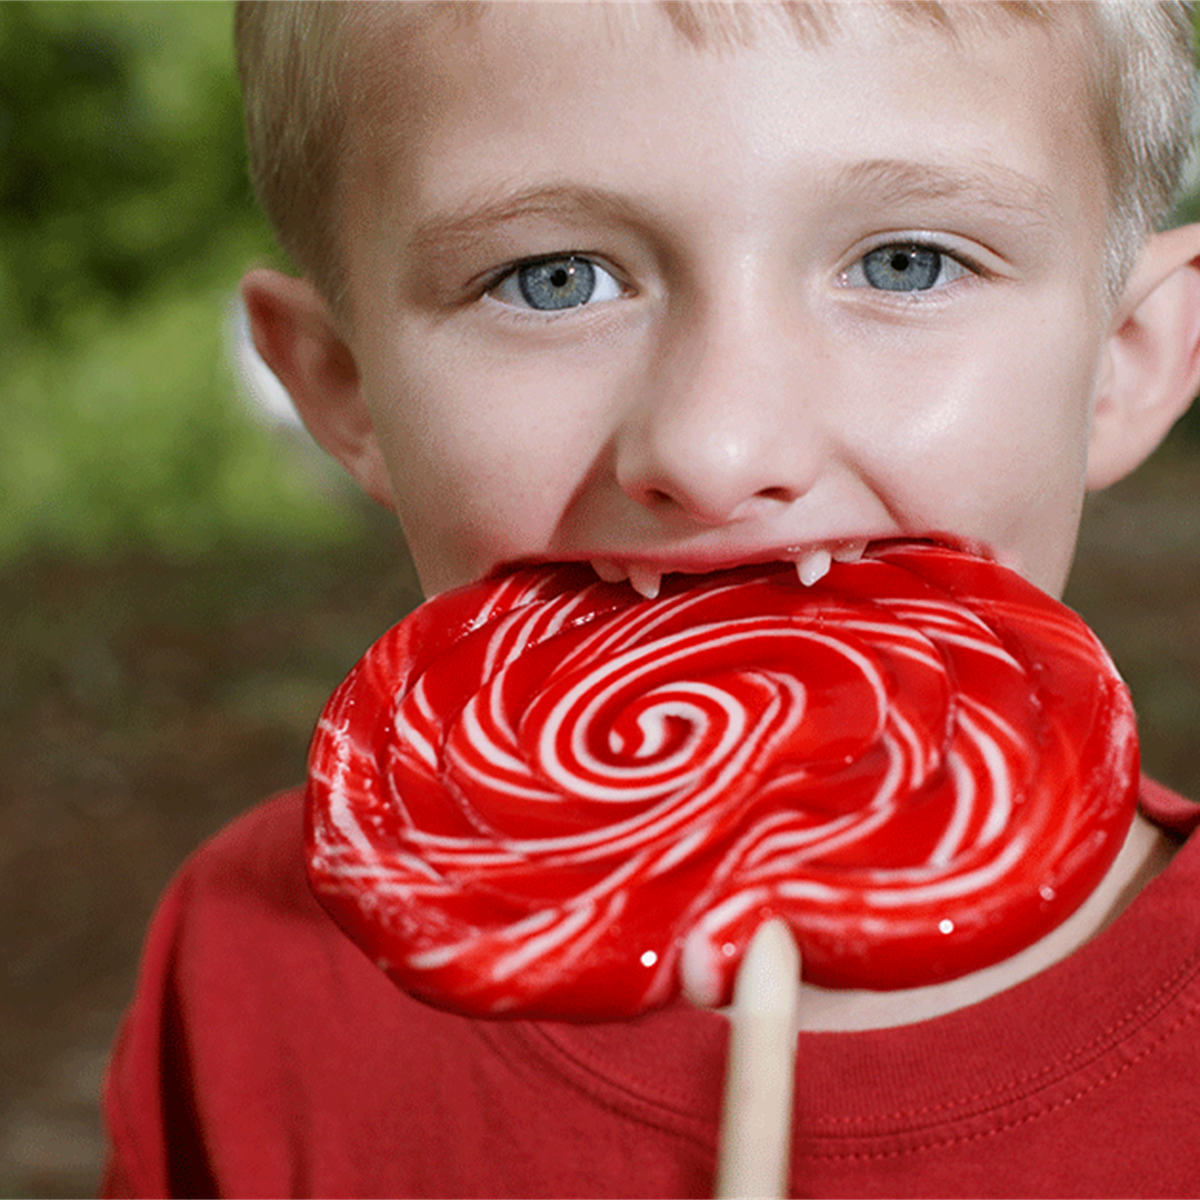 Sugar cravings in children